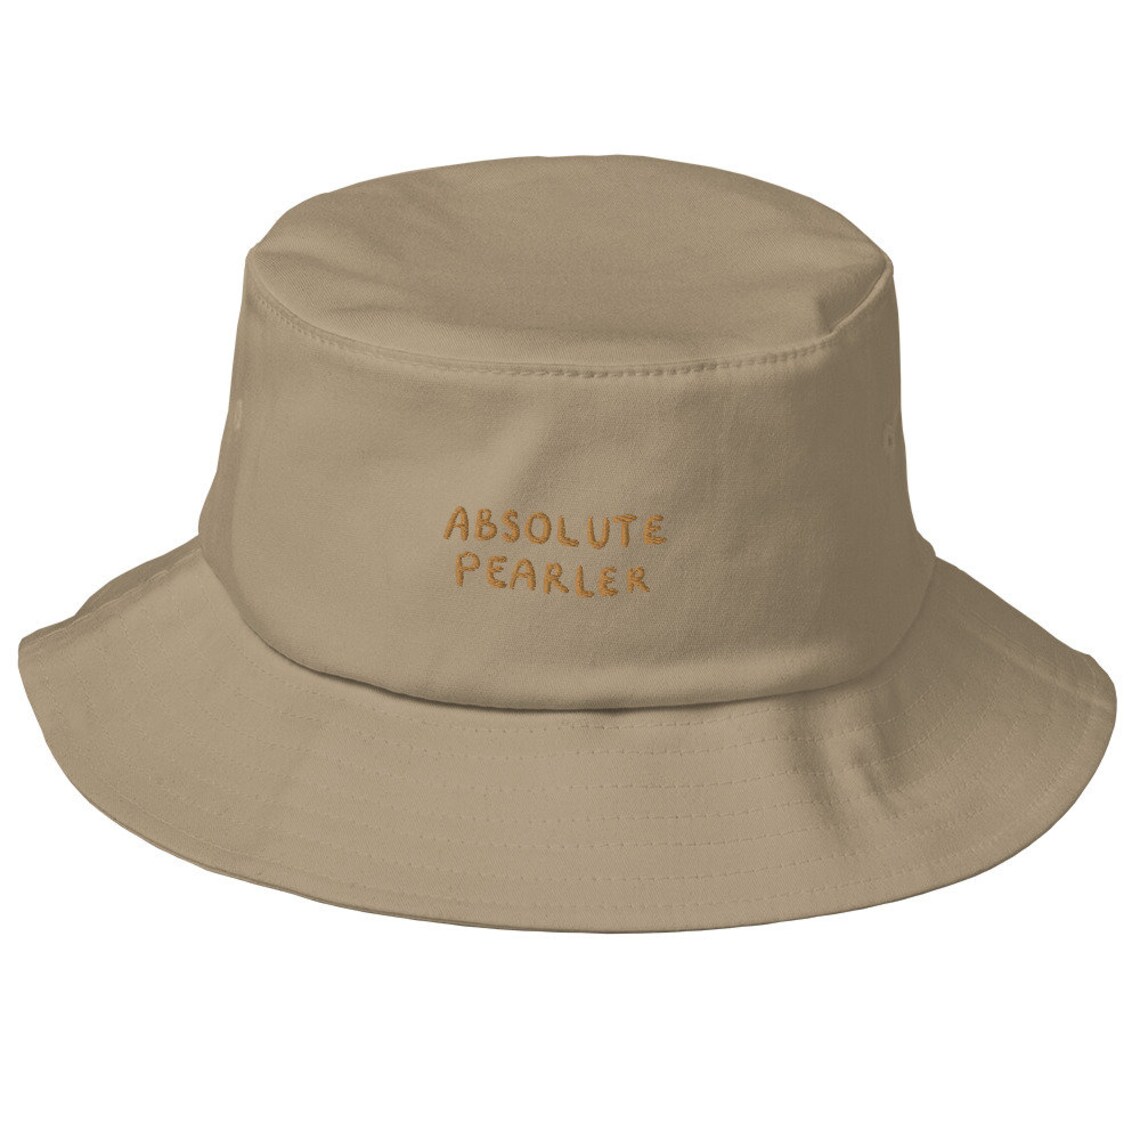 Absolute Pearler Bucket Hat Vintage Style | Etsy